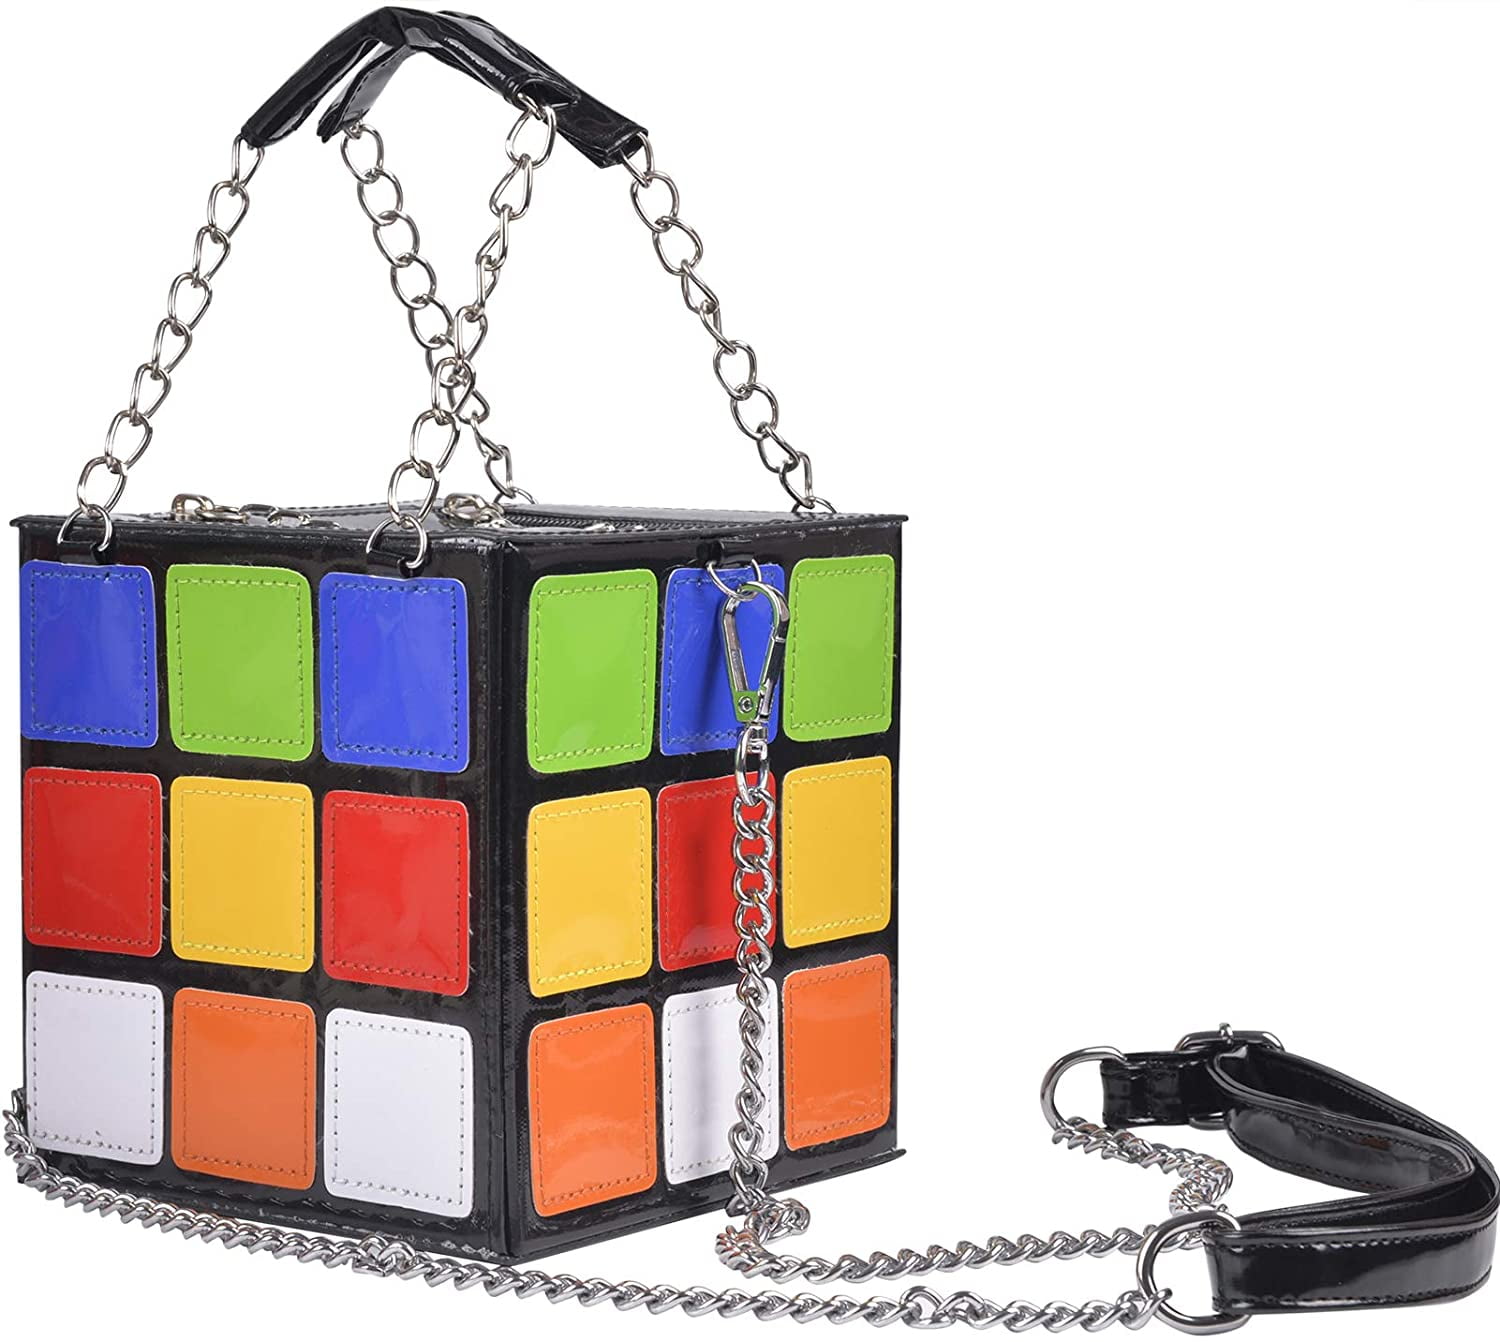 Cubic Goddess Ring Bag : The Classy Cube Shaped Clutch Purse ⋆ Gabino Bags